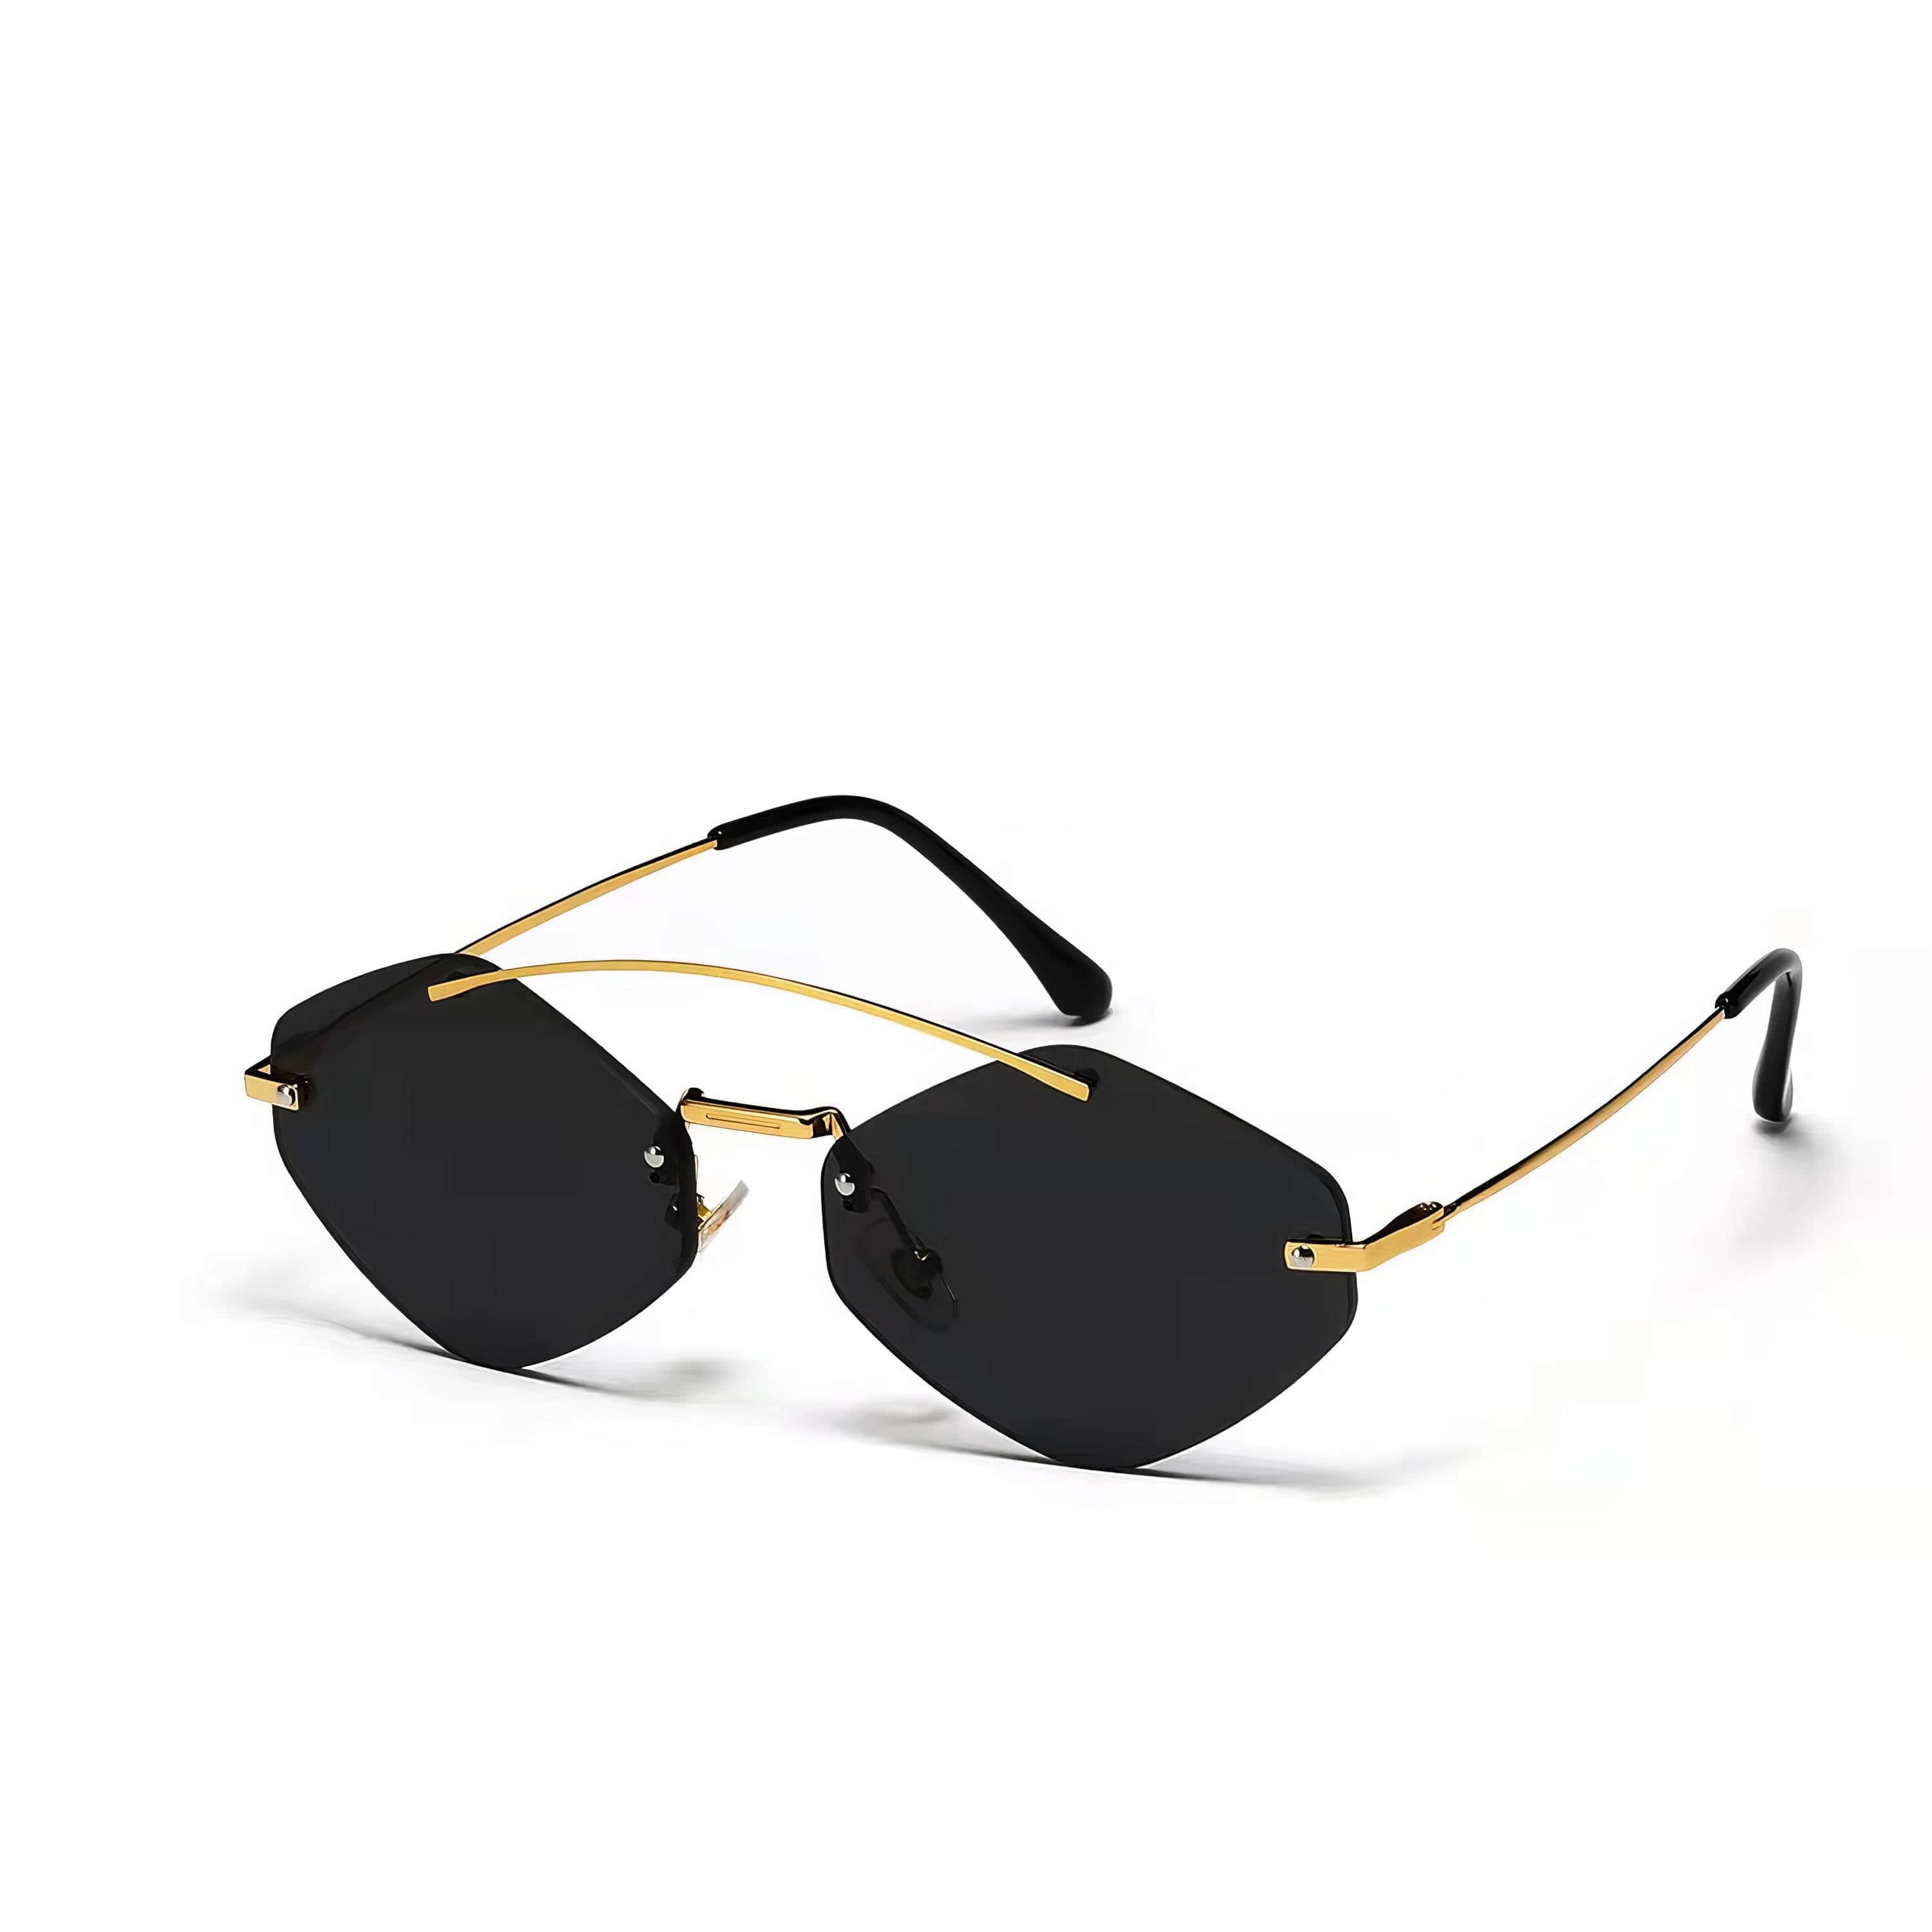 Retro Unique Double Bridge Sunglasses Black / Resin